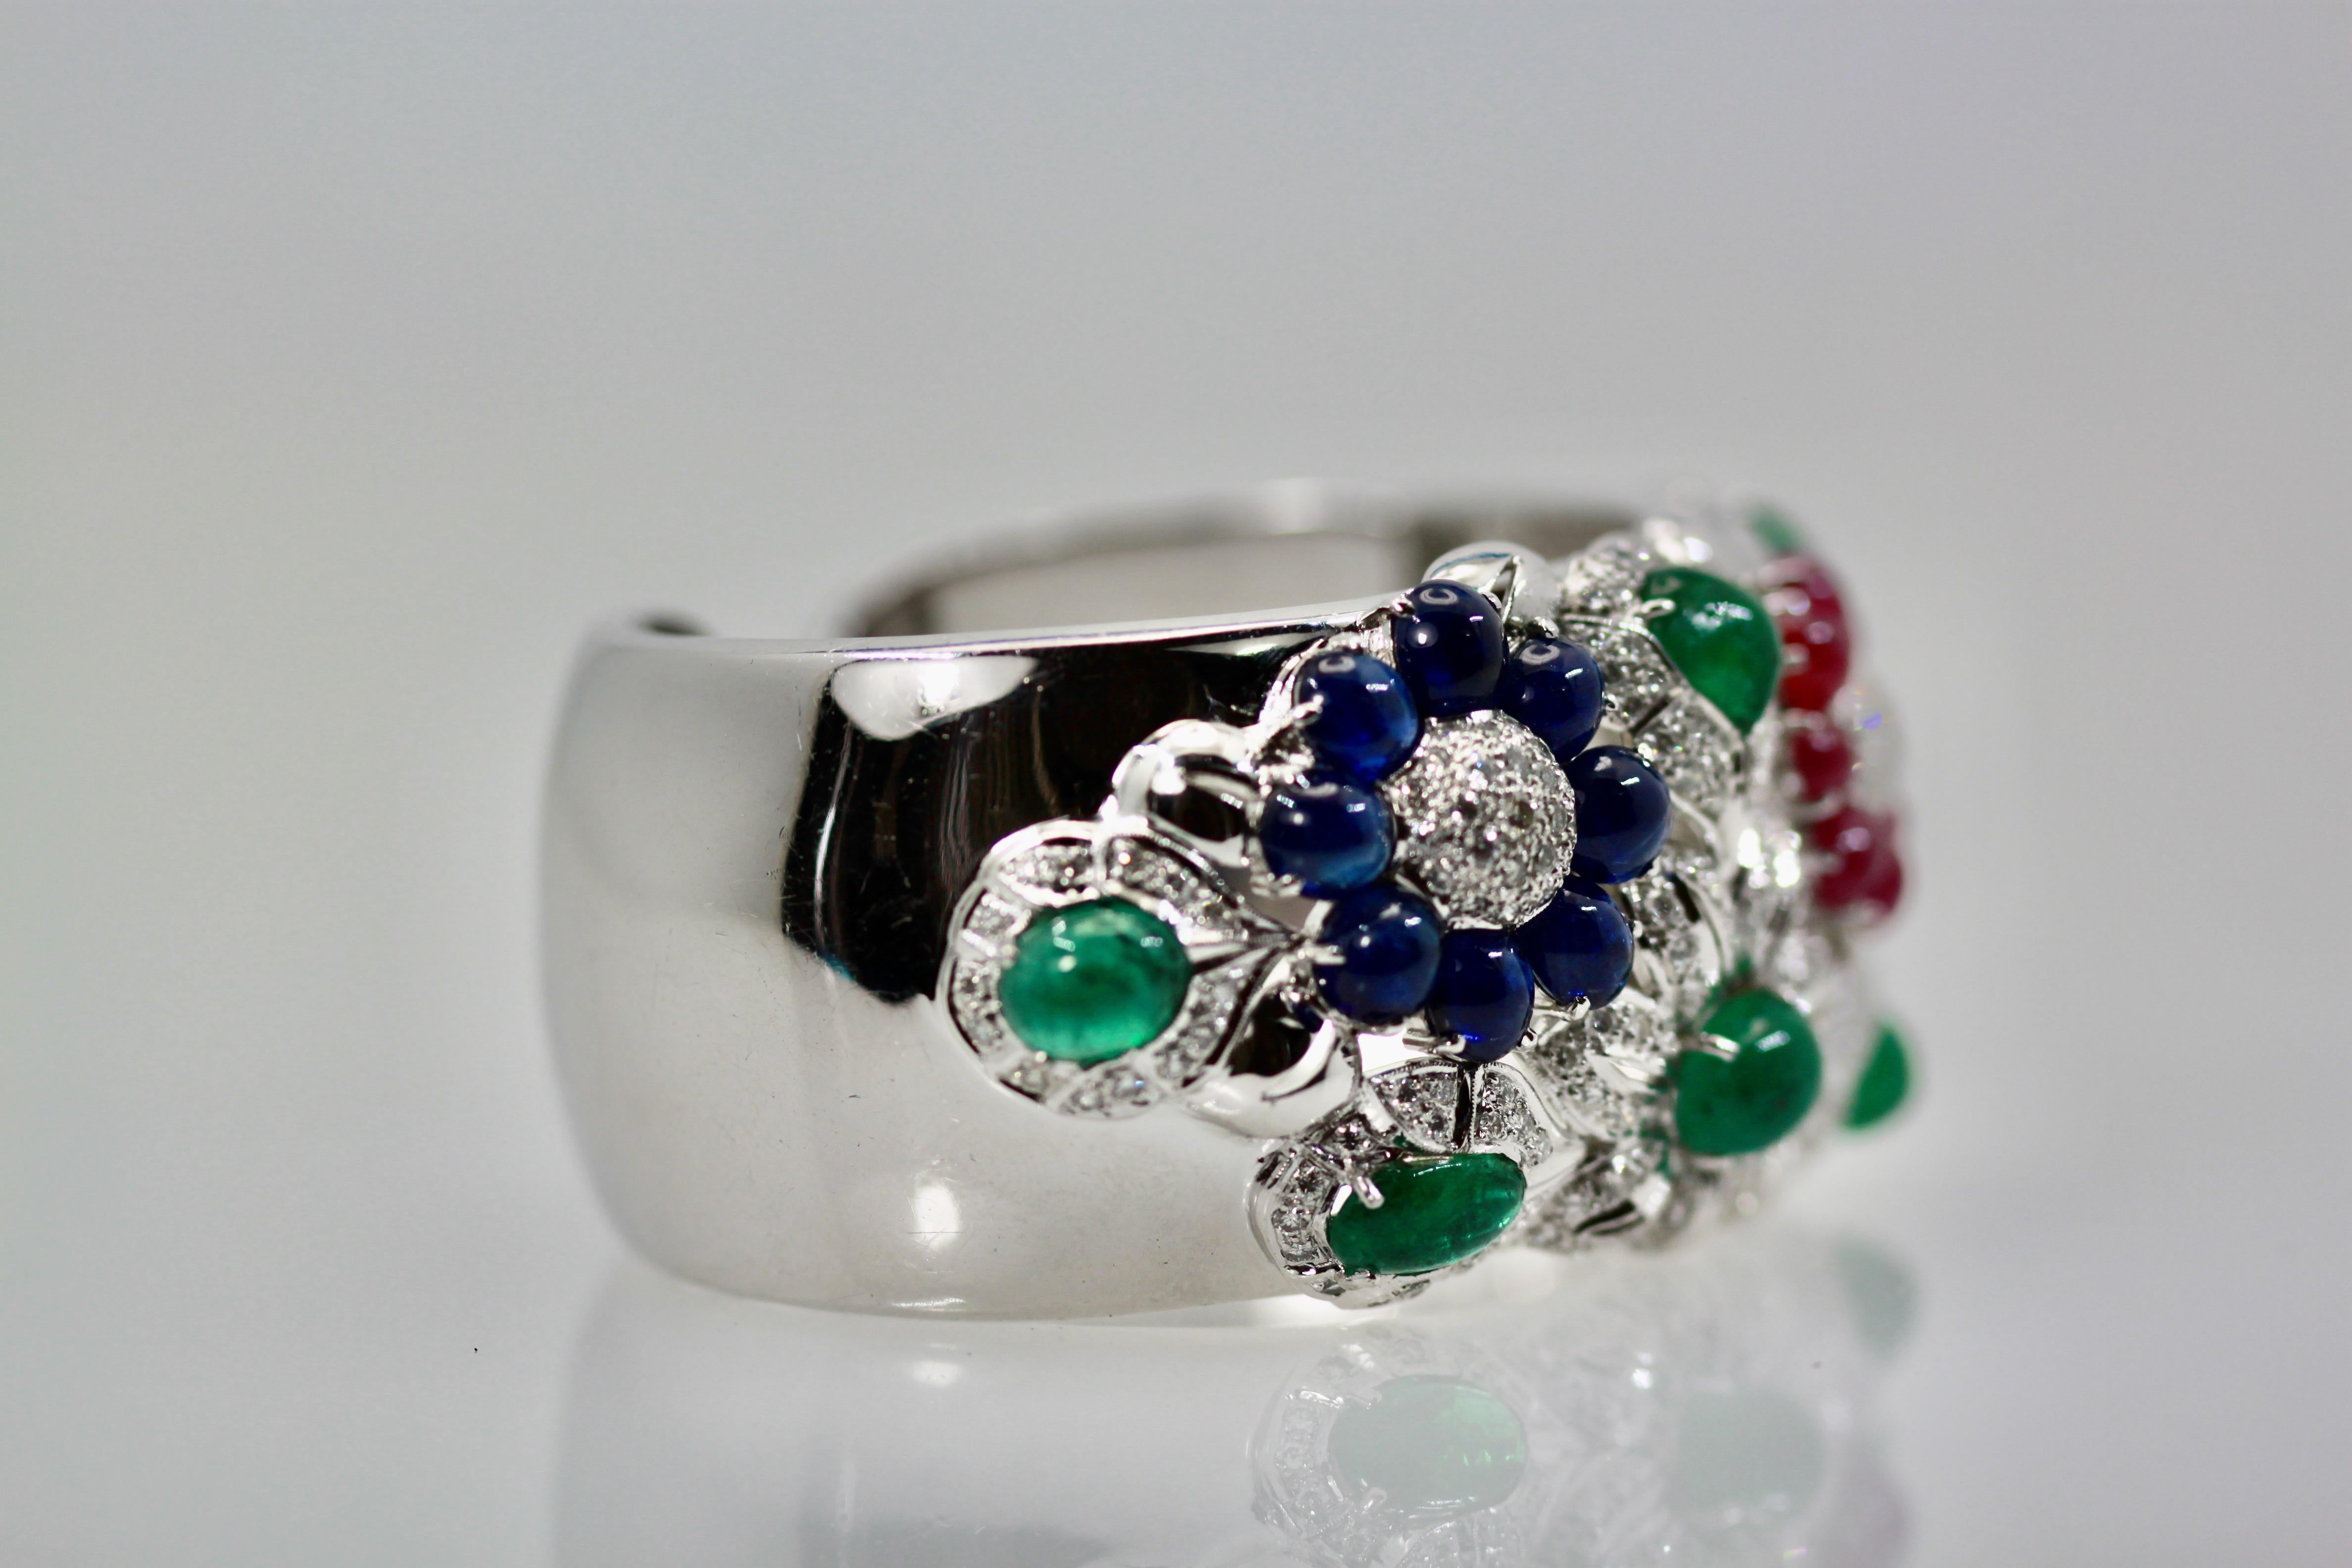 Modern Large Wide Cuff Bracelet 17 Carat Rubies, Emeralds, Sapphires, Diamonds 18 Karat